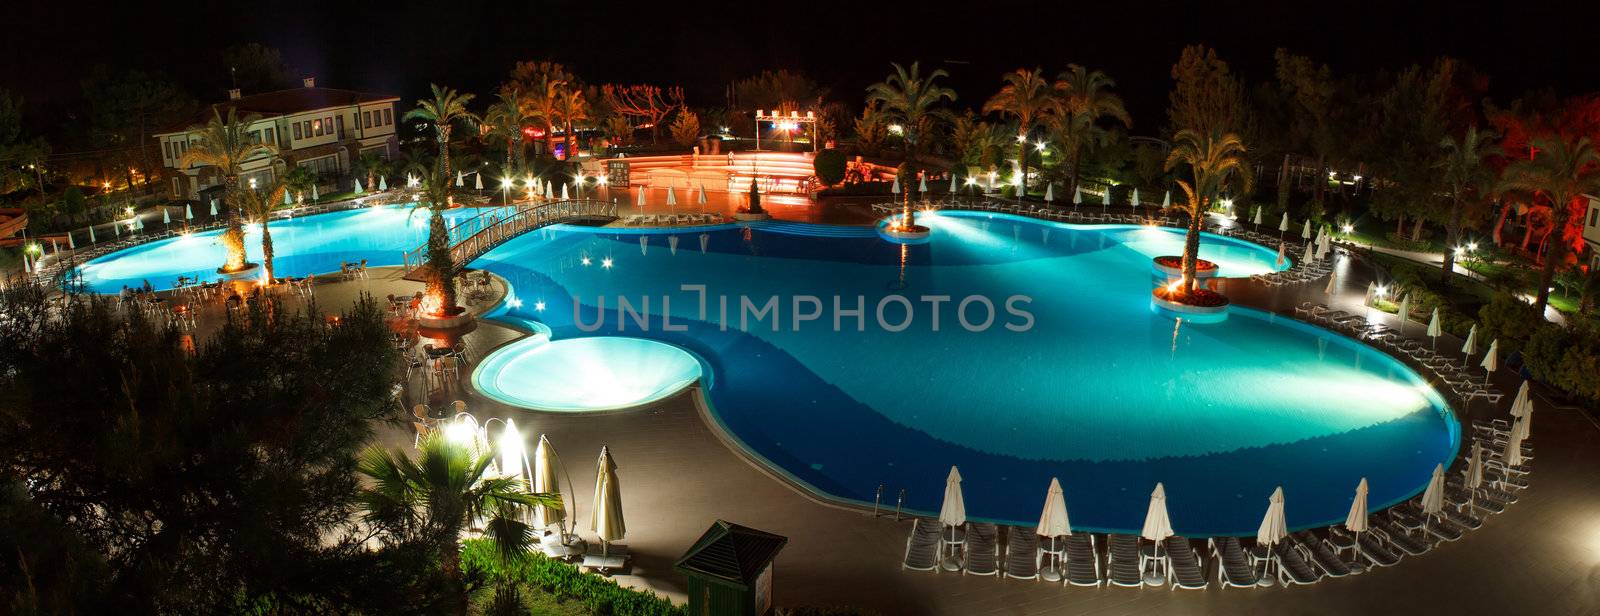 panorama of pool at night by artush